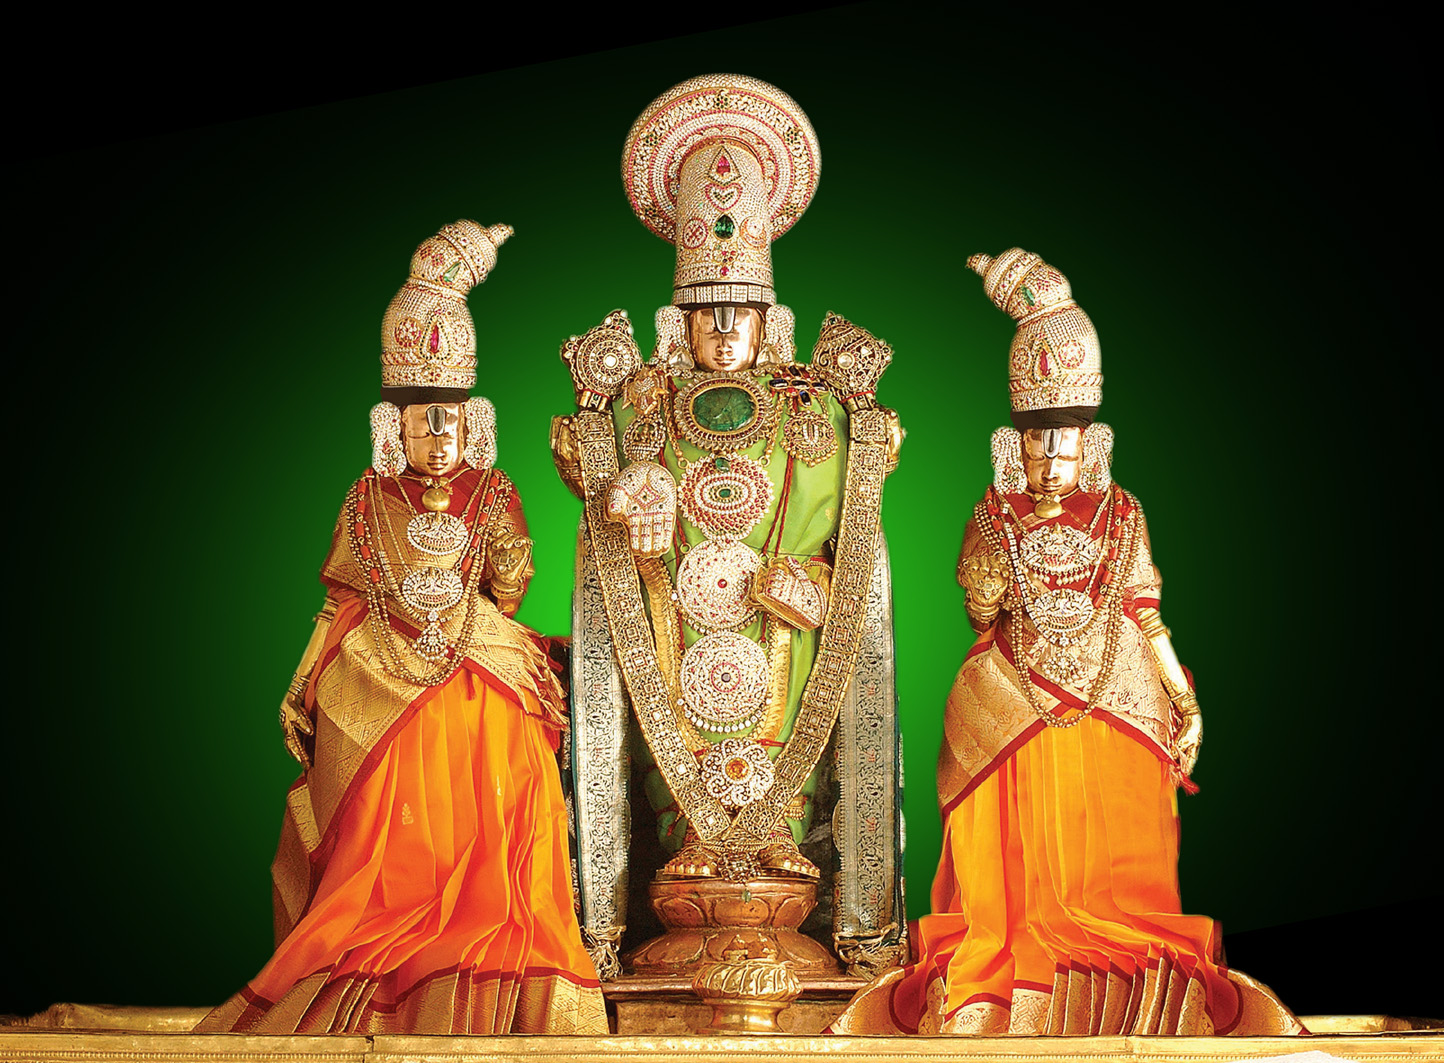 Padmavathi travels